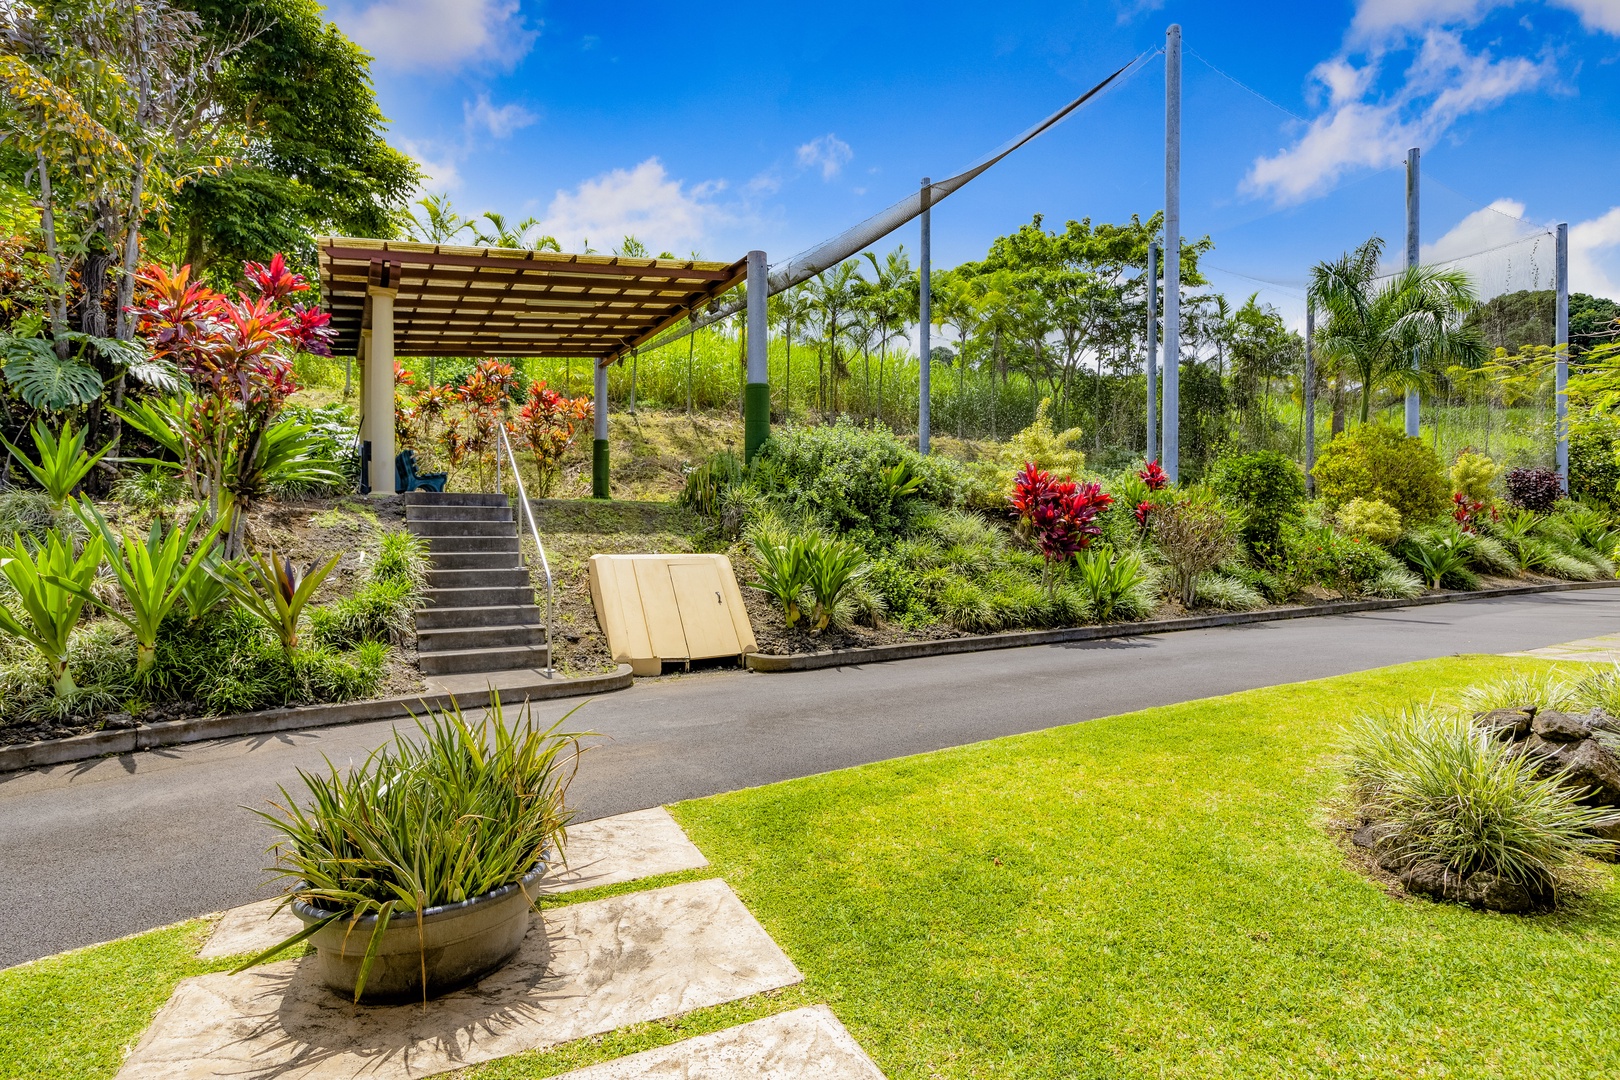 Kailua Kona Vacation Rentals, Kailua Kona Estate** - A lush and vibrant paradise in the garden of tropics.